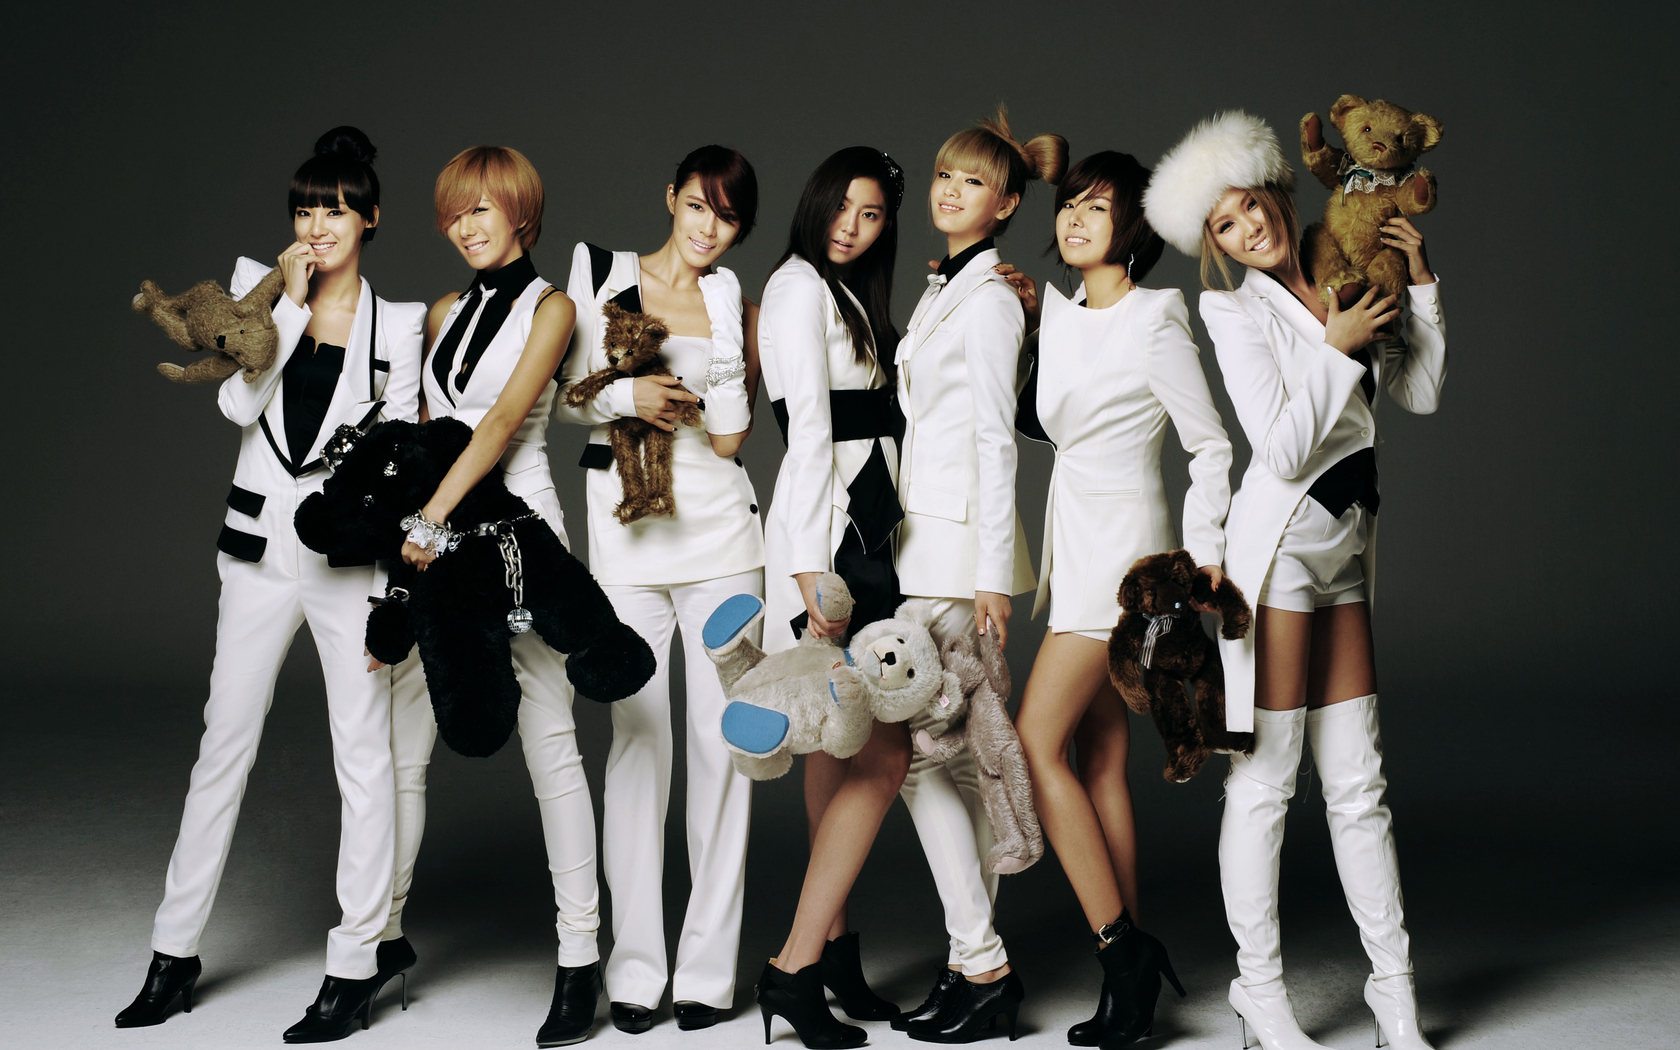 Kpop Wallpaper South Korea Music Girls Asian Photo